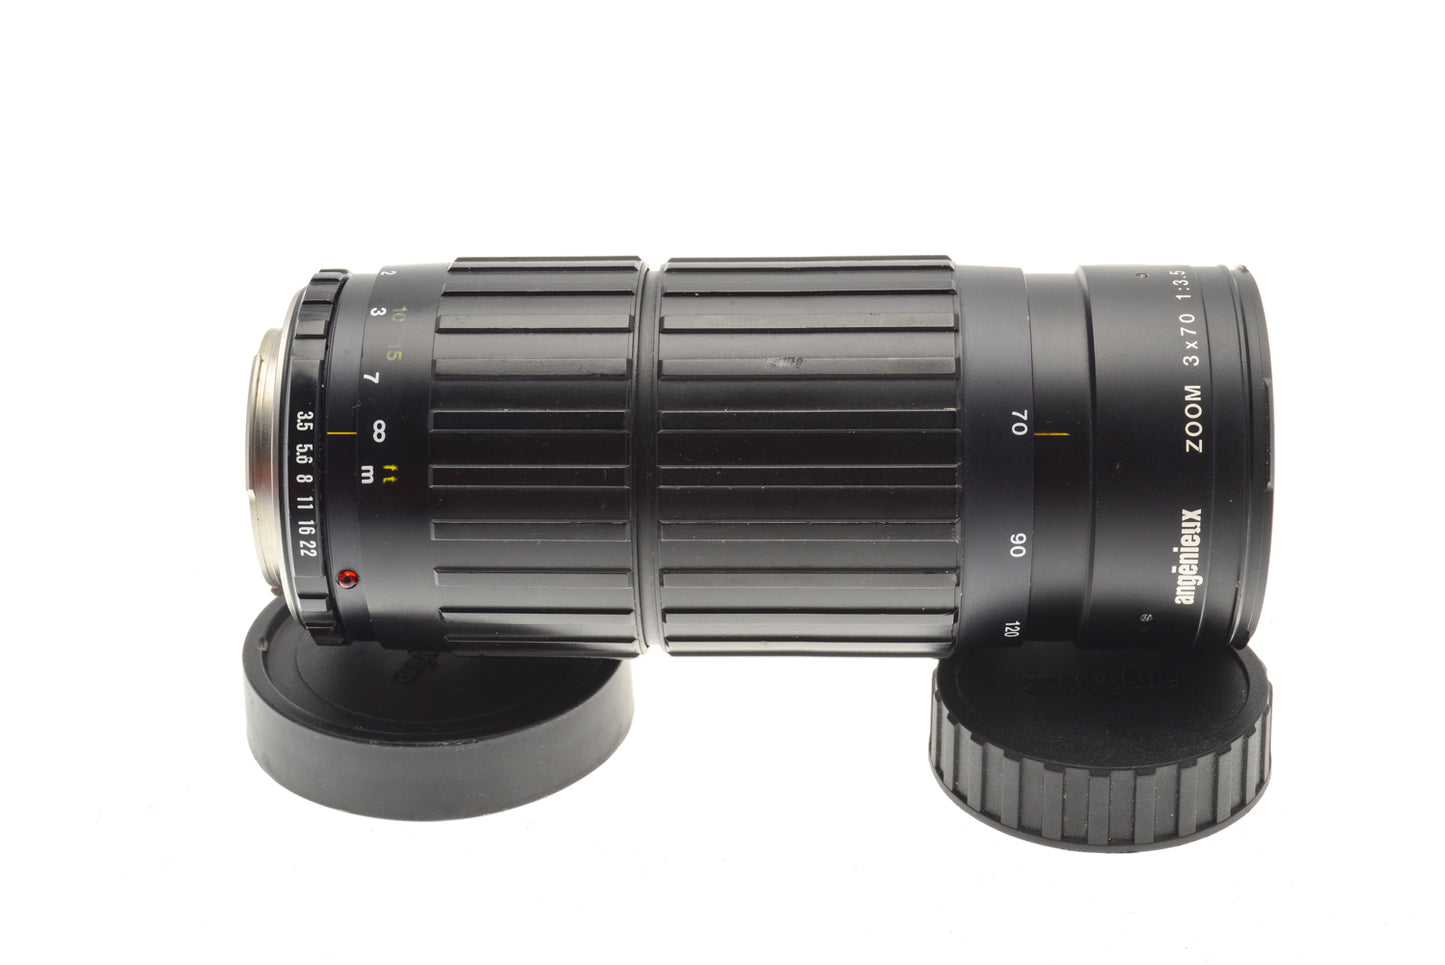 Angenieux 70-210mm f3.5 Macro Zoom 3x70 (3 Cam) - Lens